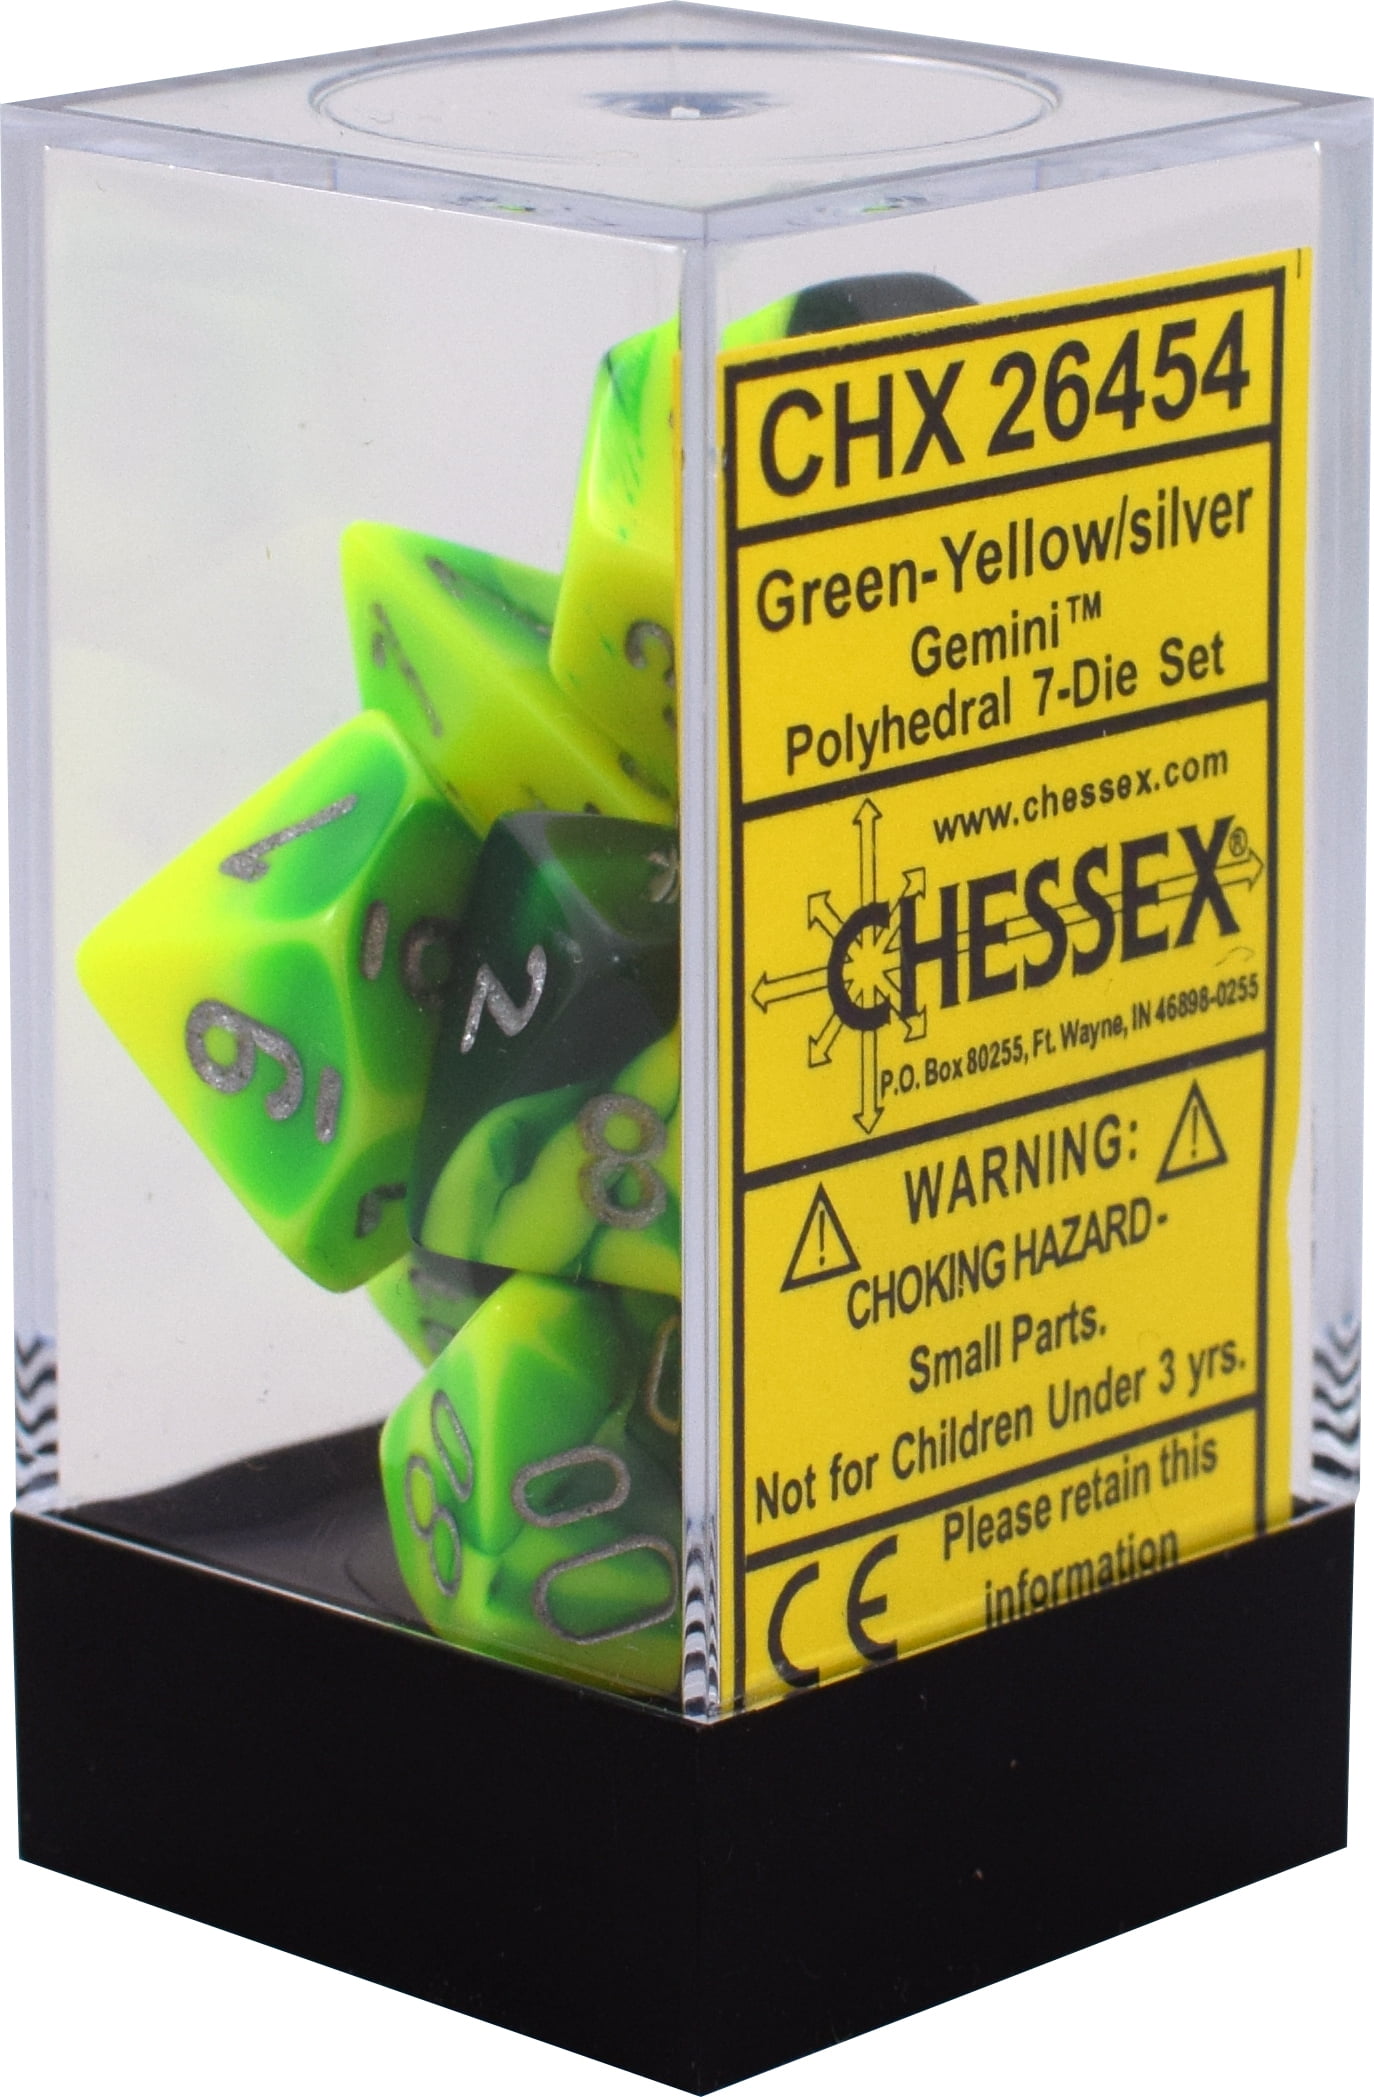 Chessex 7 Dice Set Gemini Green-Yellow w/ Silver CHX 26454 for D&D & D20 